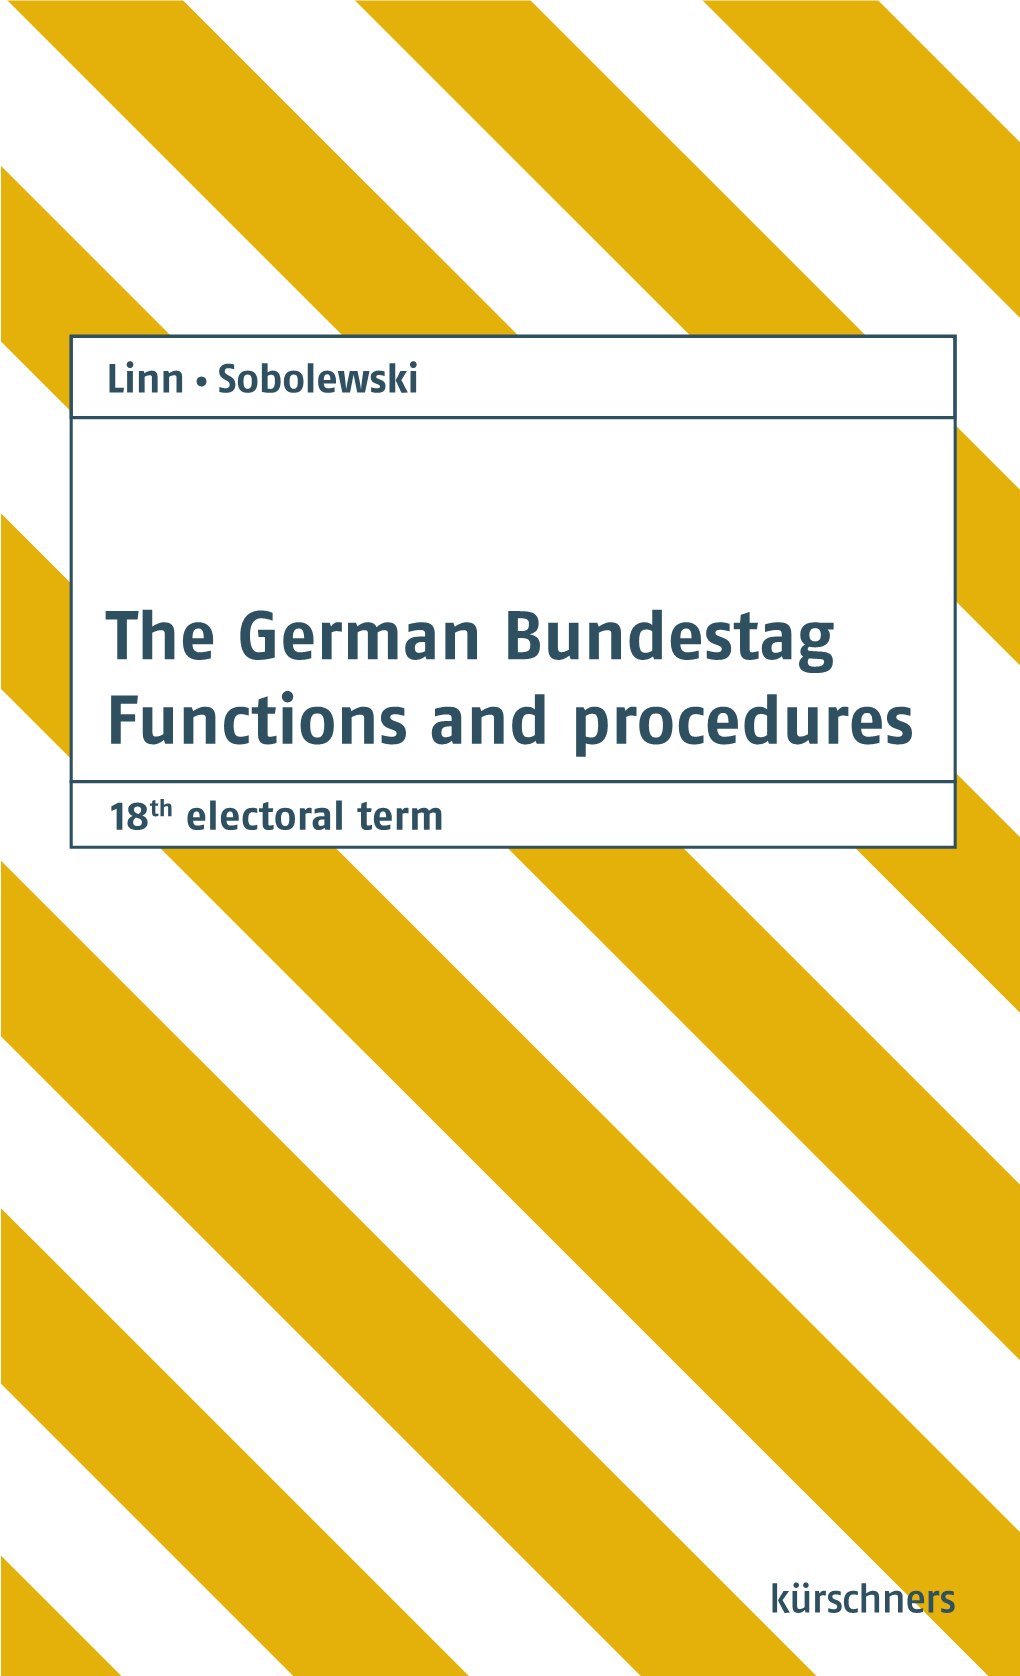 The German Bundestag Functions and Procedures